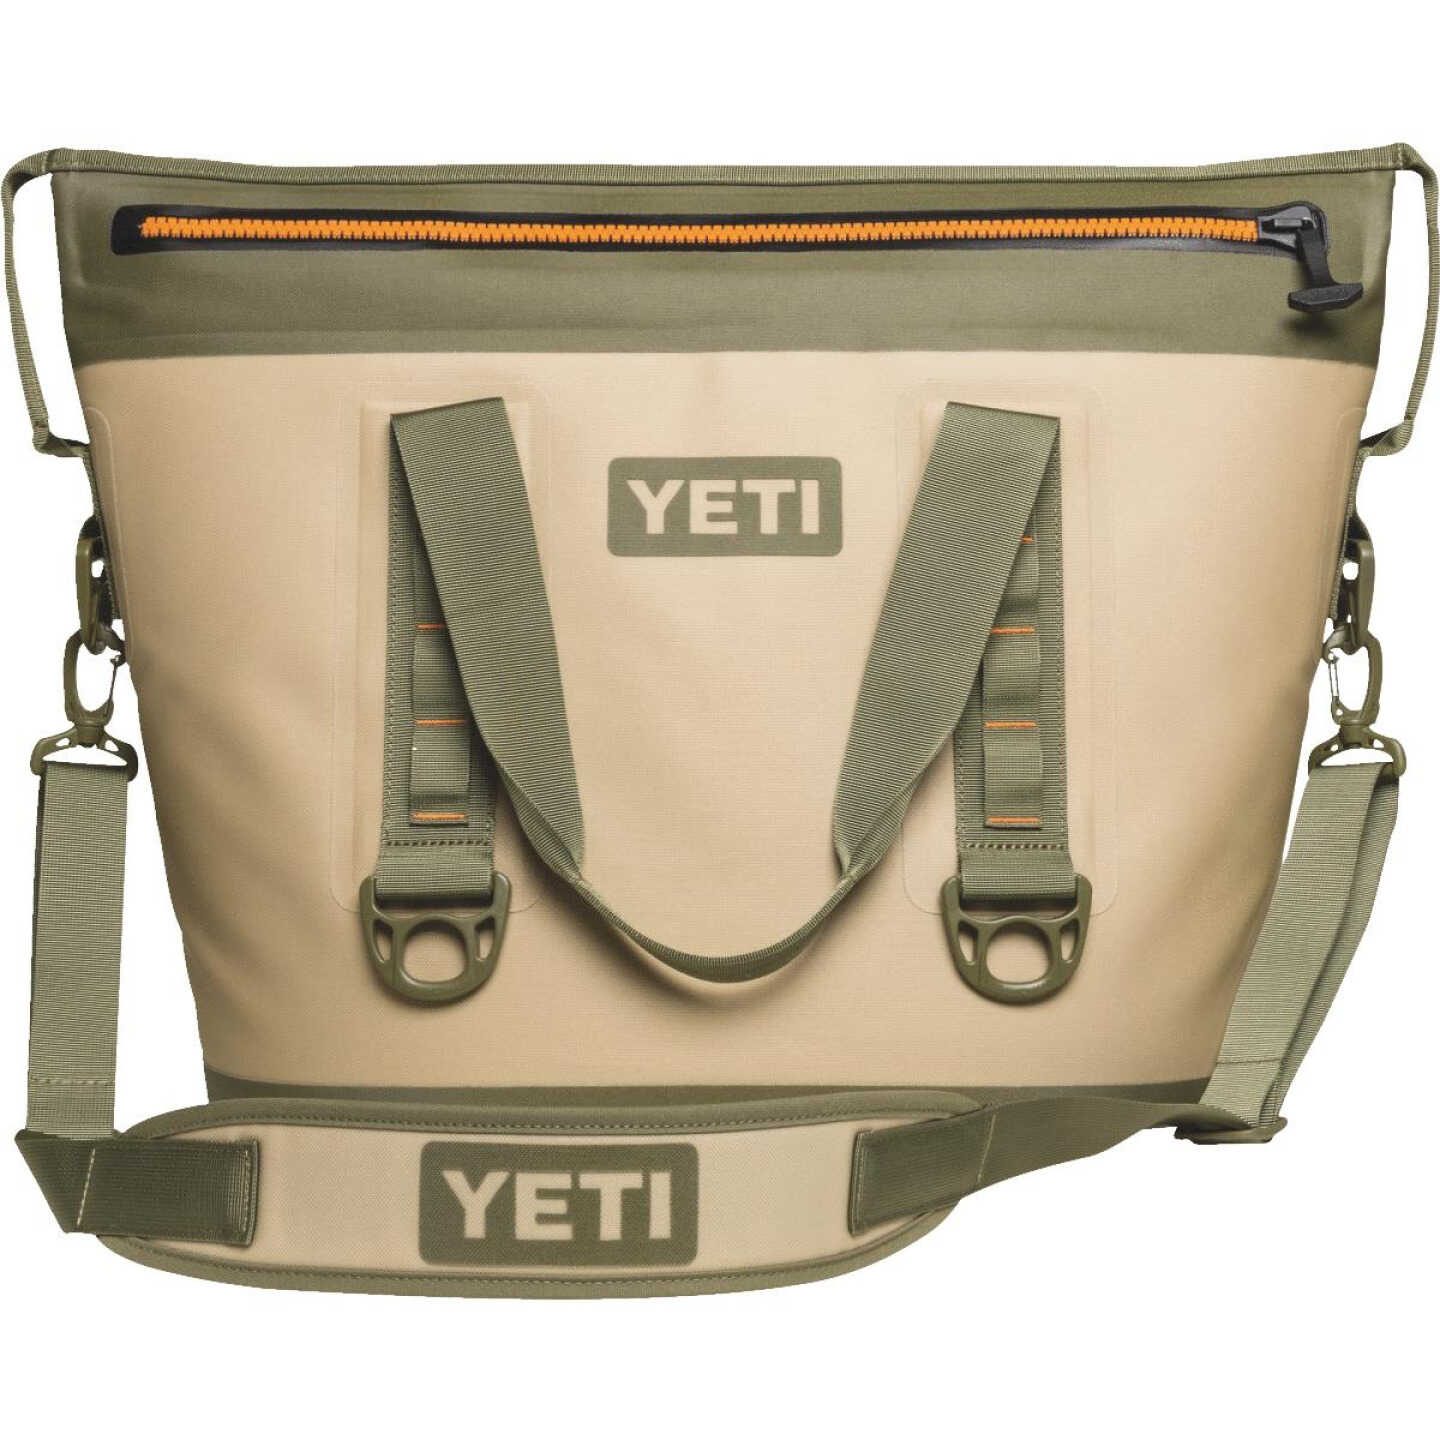 Soft Coolers Like YETI But Cheaper - YETI Cooler Bag Alternatives